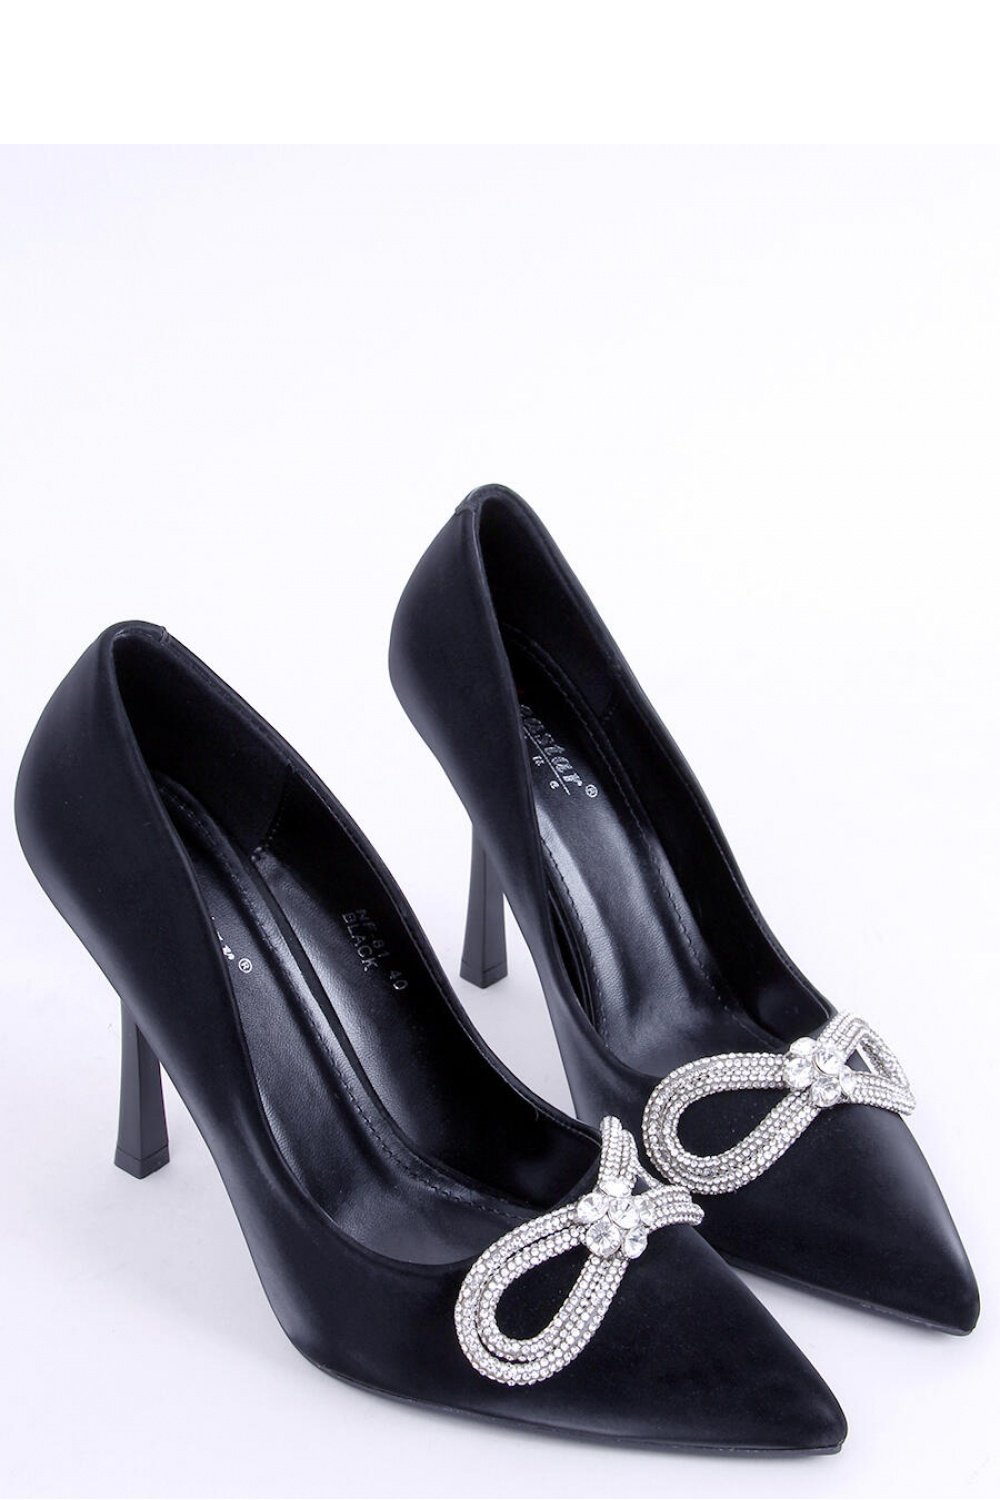 High heels model 172826 Inello Posh Styles Apparel